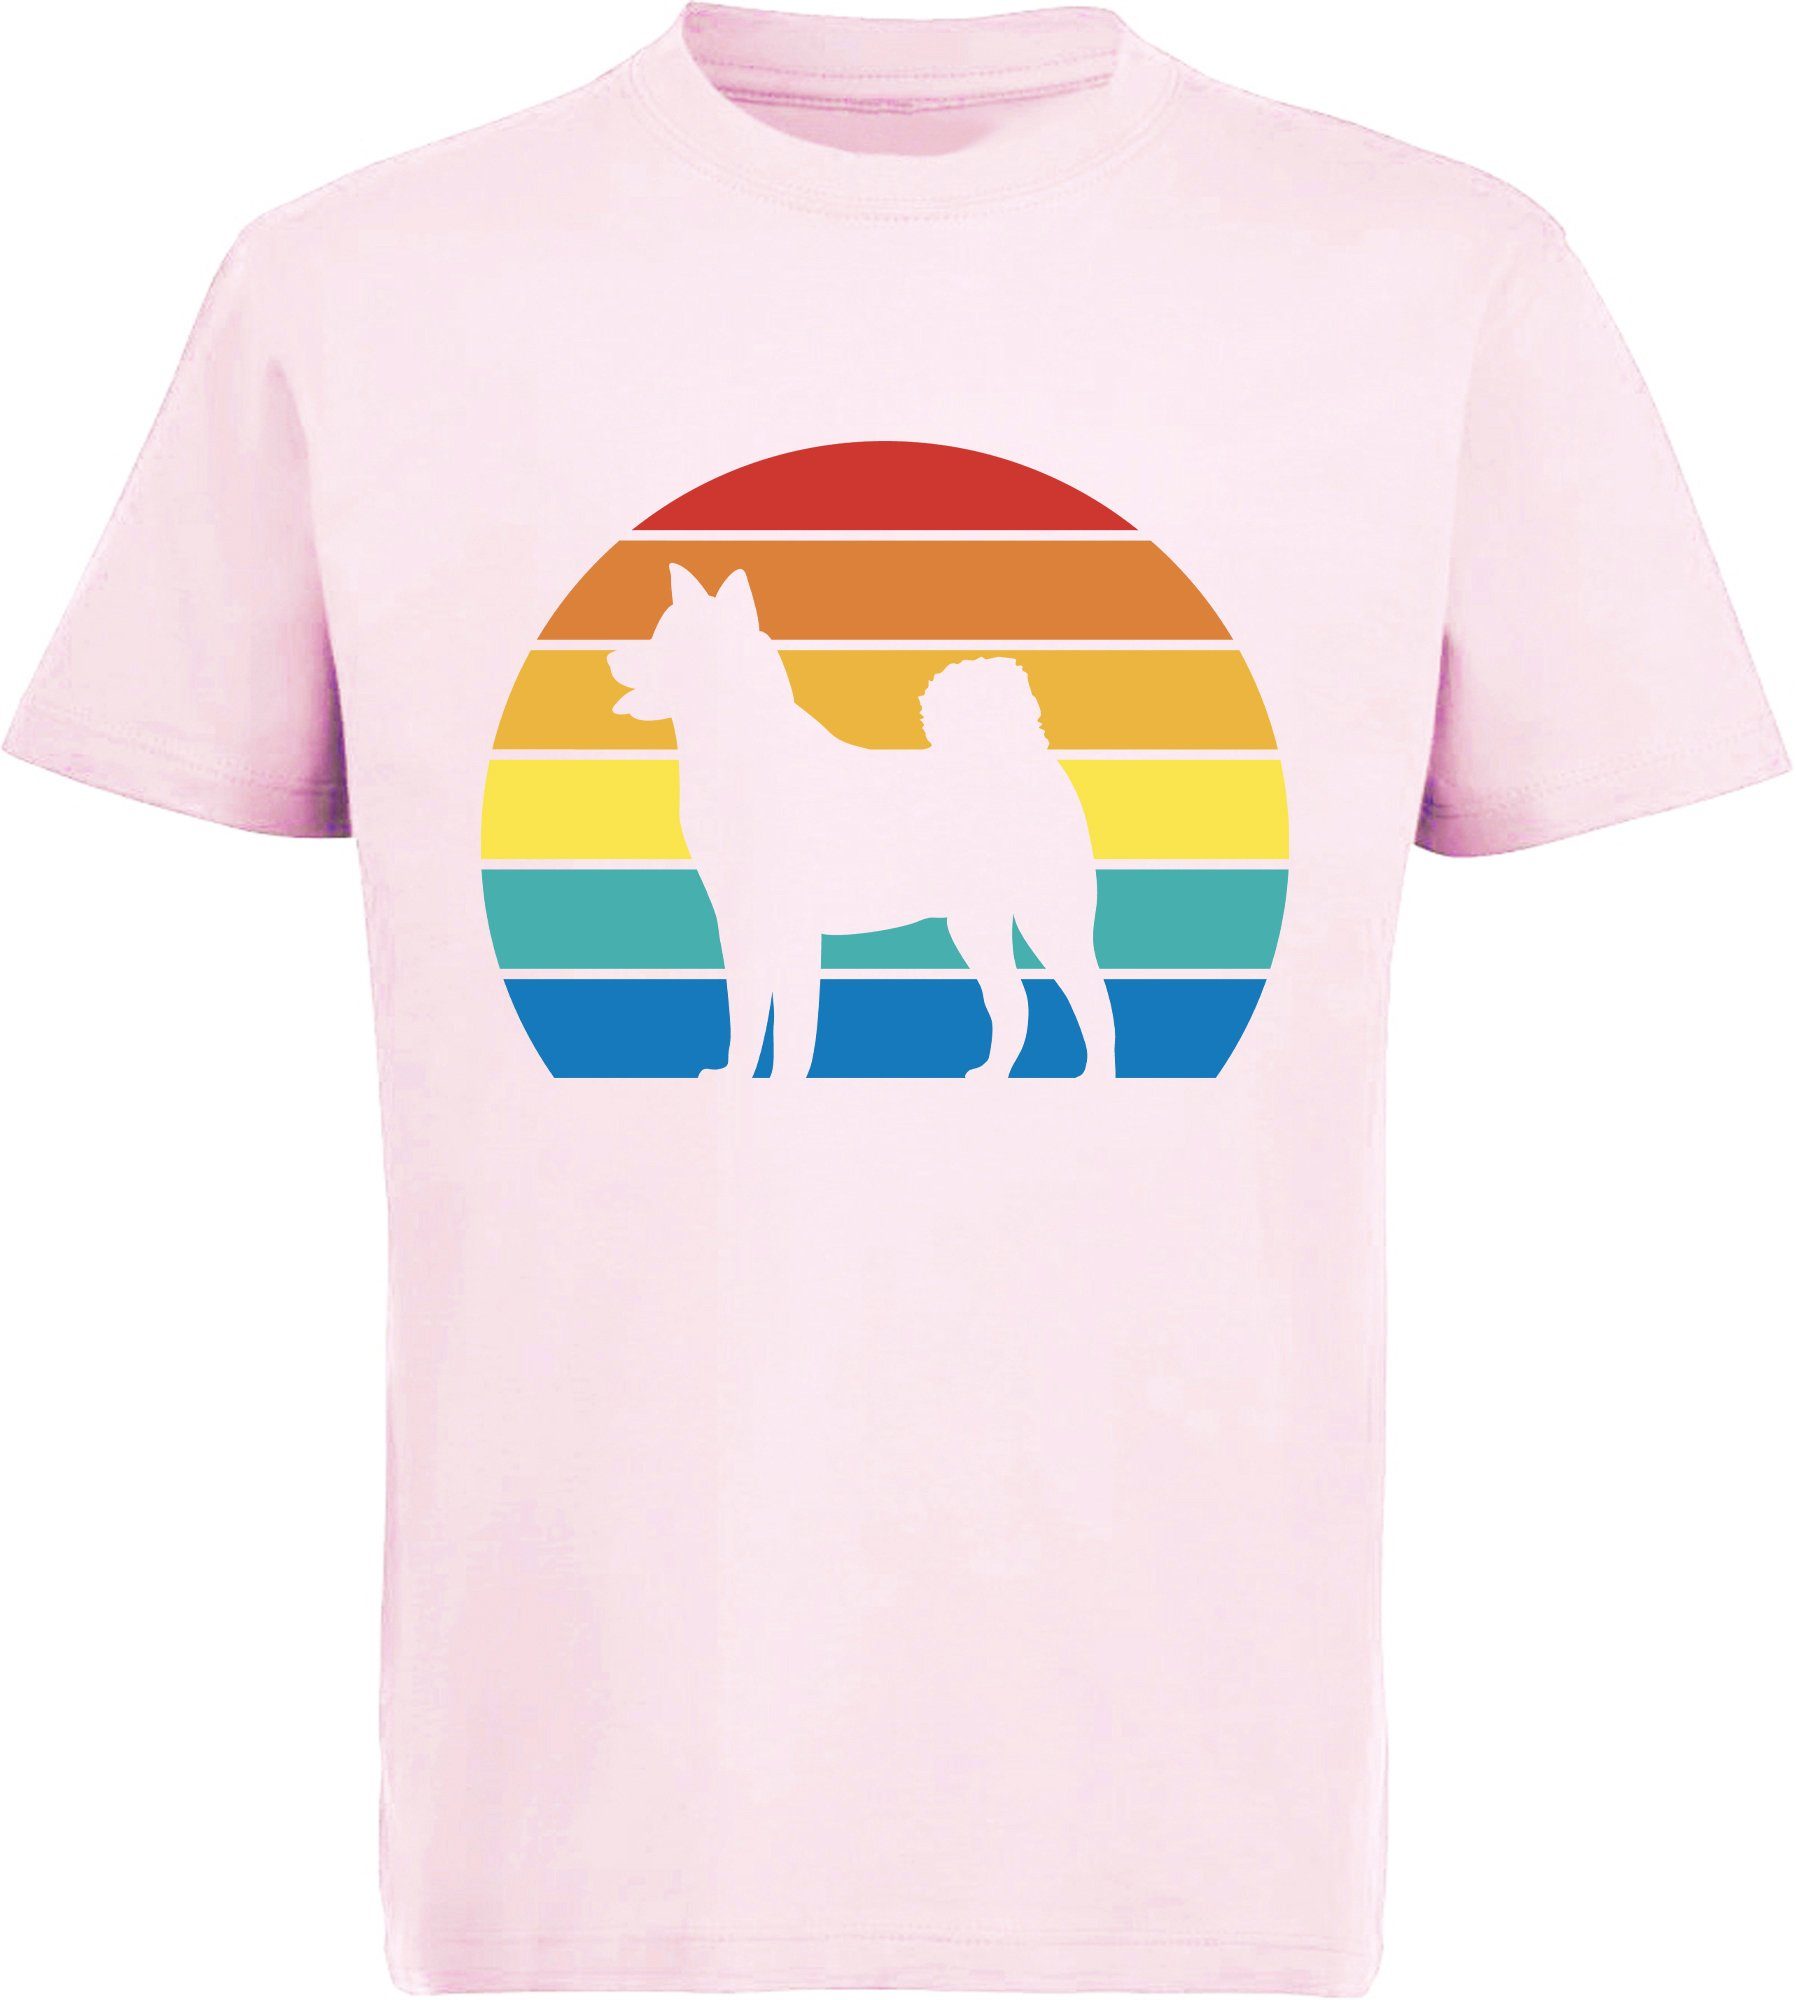 bedruckt Print-Shirt Kinder Hunde Retro mit MyDesign24 T-Shirt Aufdruck, - i236 Akita rosa Bild Baumwollshirt